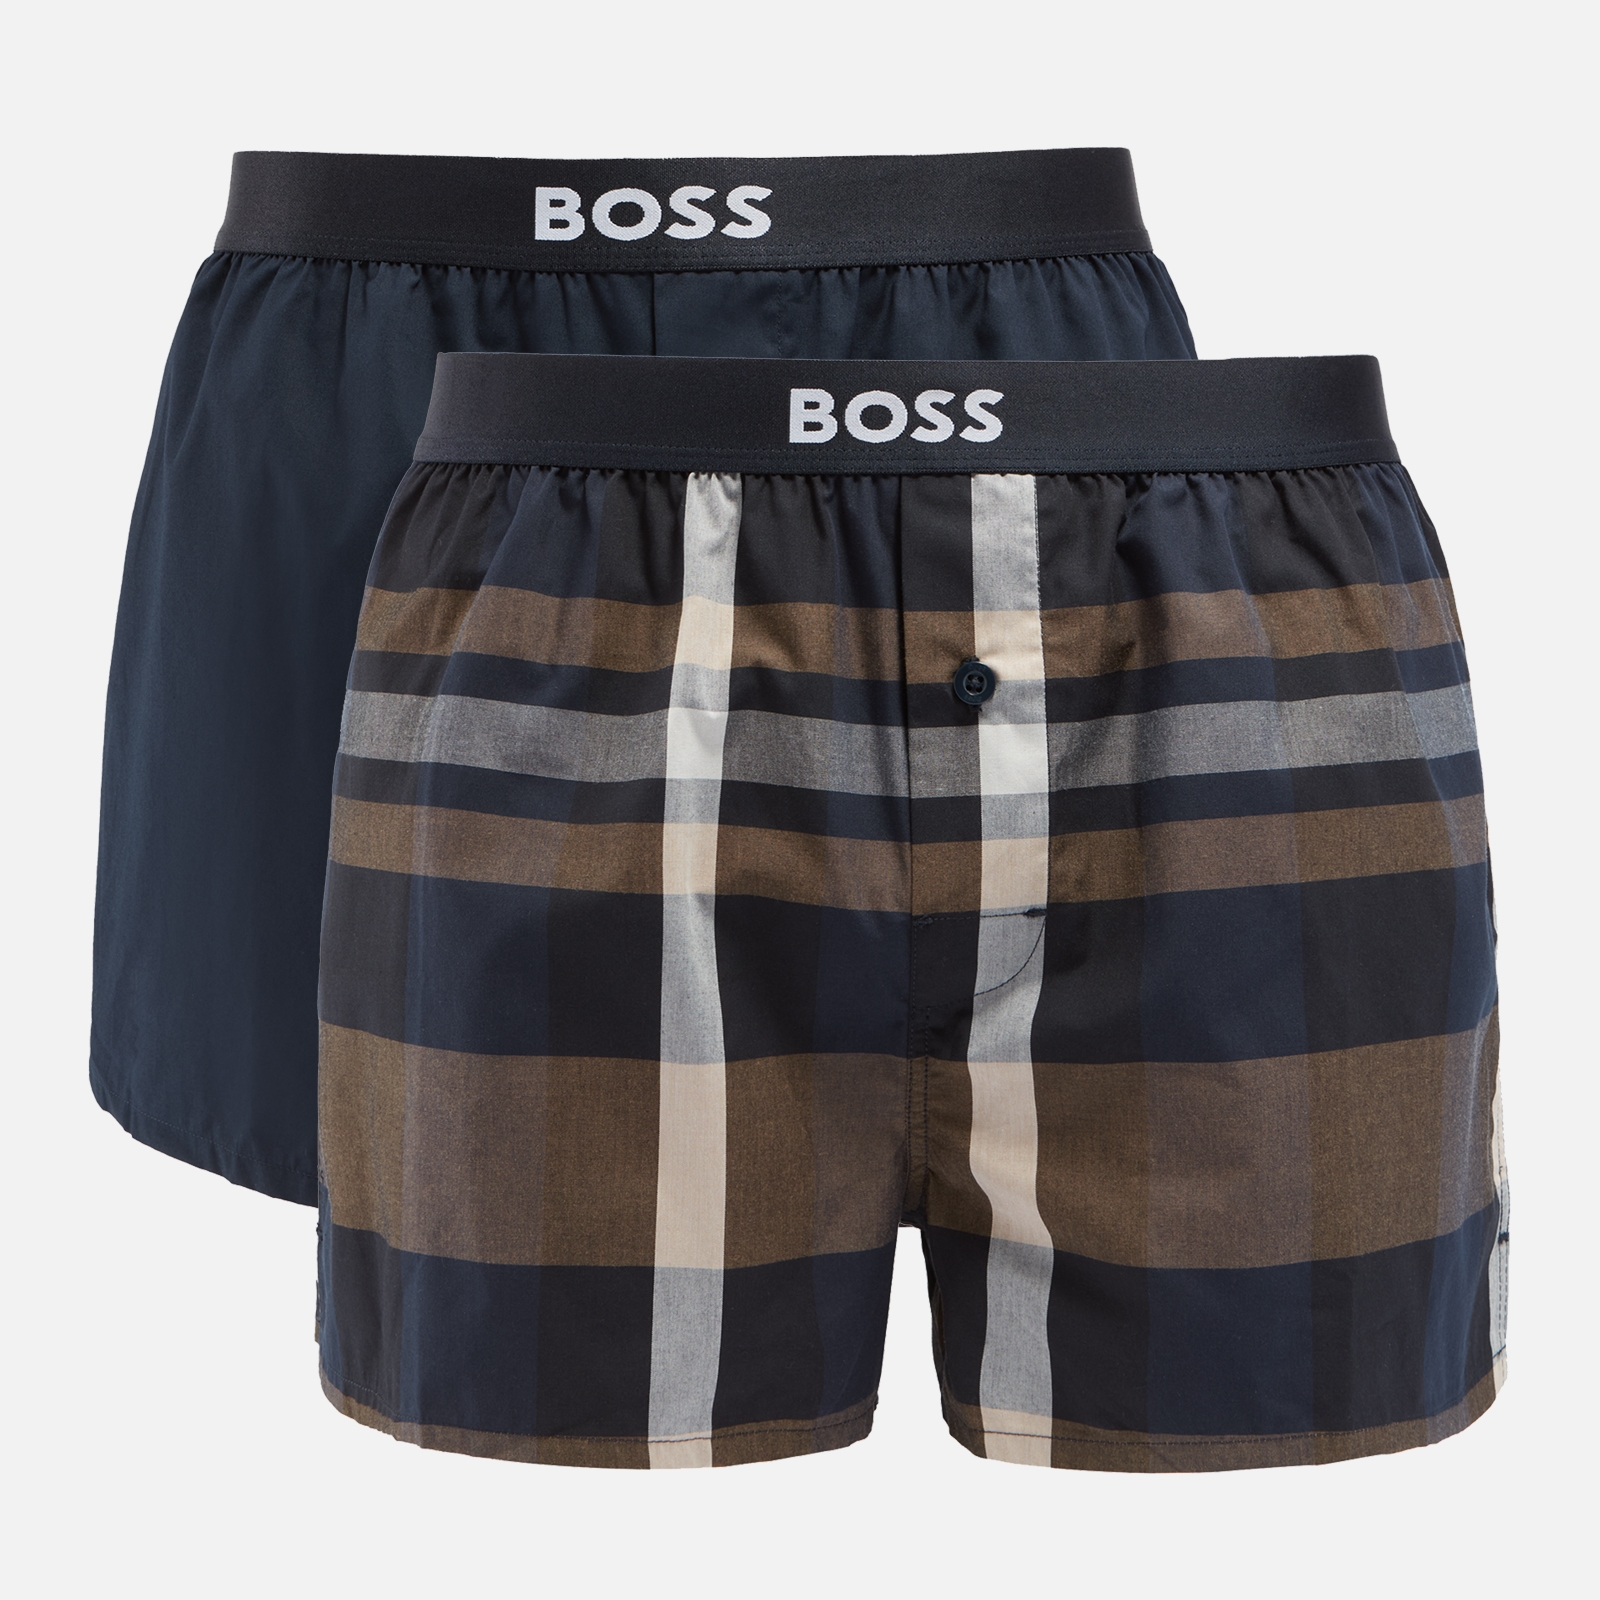 BOSS Bodywear Cotton 2-Pack Boxer Shorts